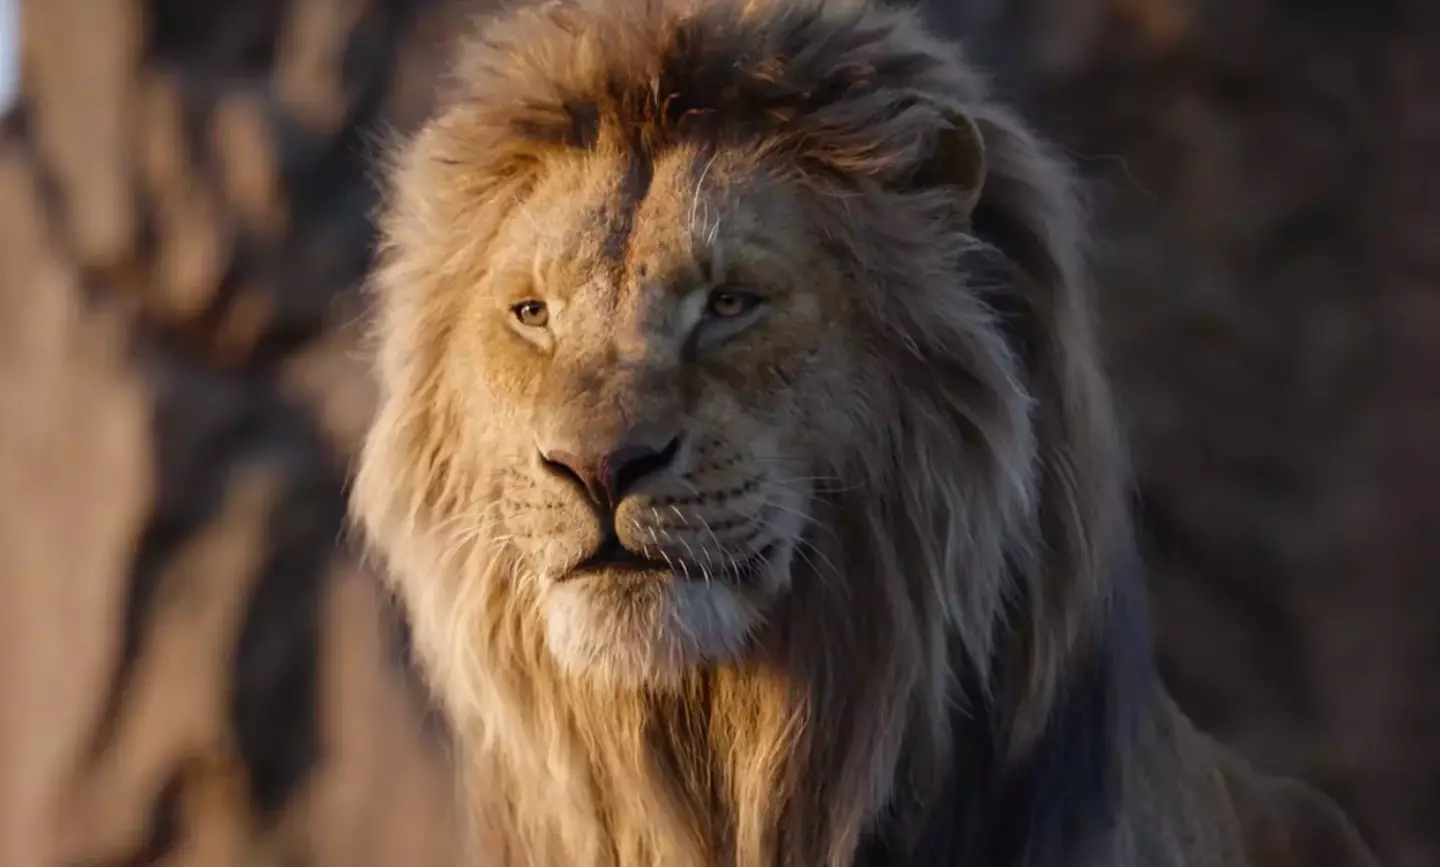 Mufasa: The Lion King will drop in cinemas in December. (Disney)